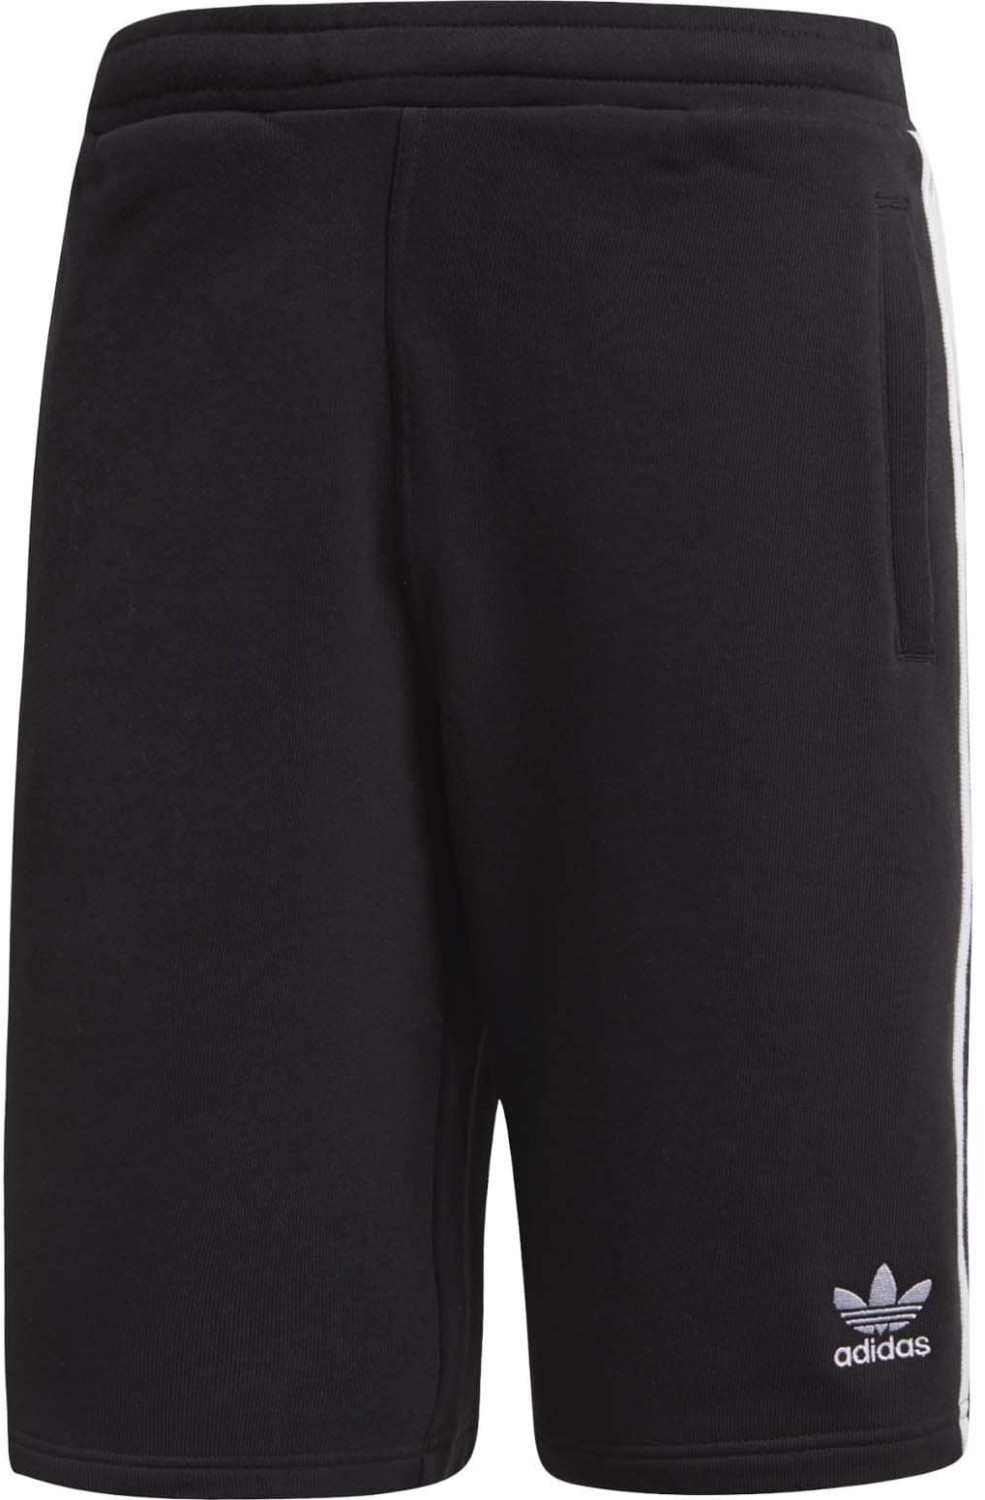 Adidas 3-Stripes Shorts black